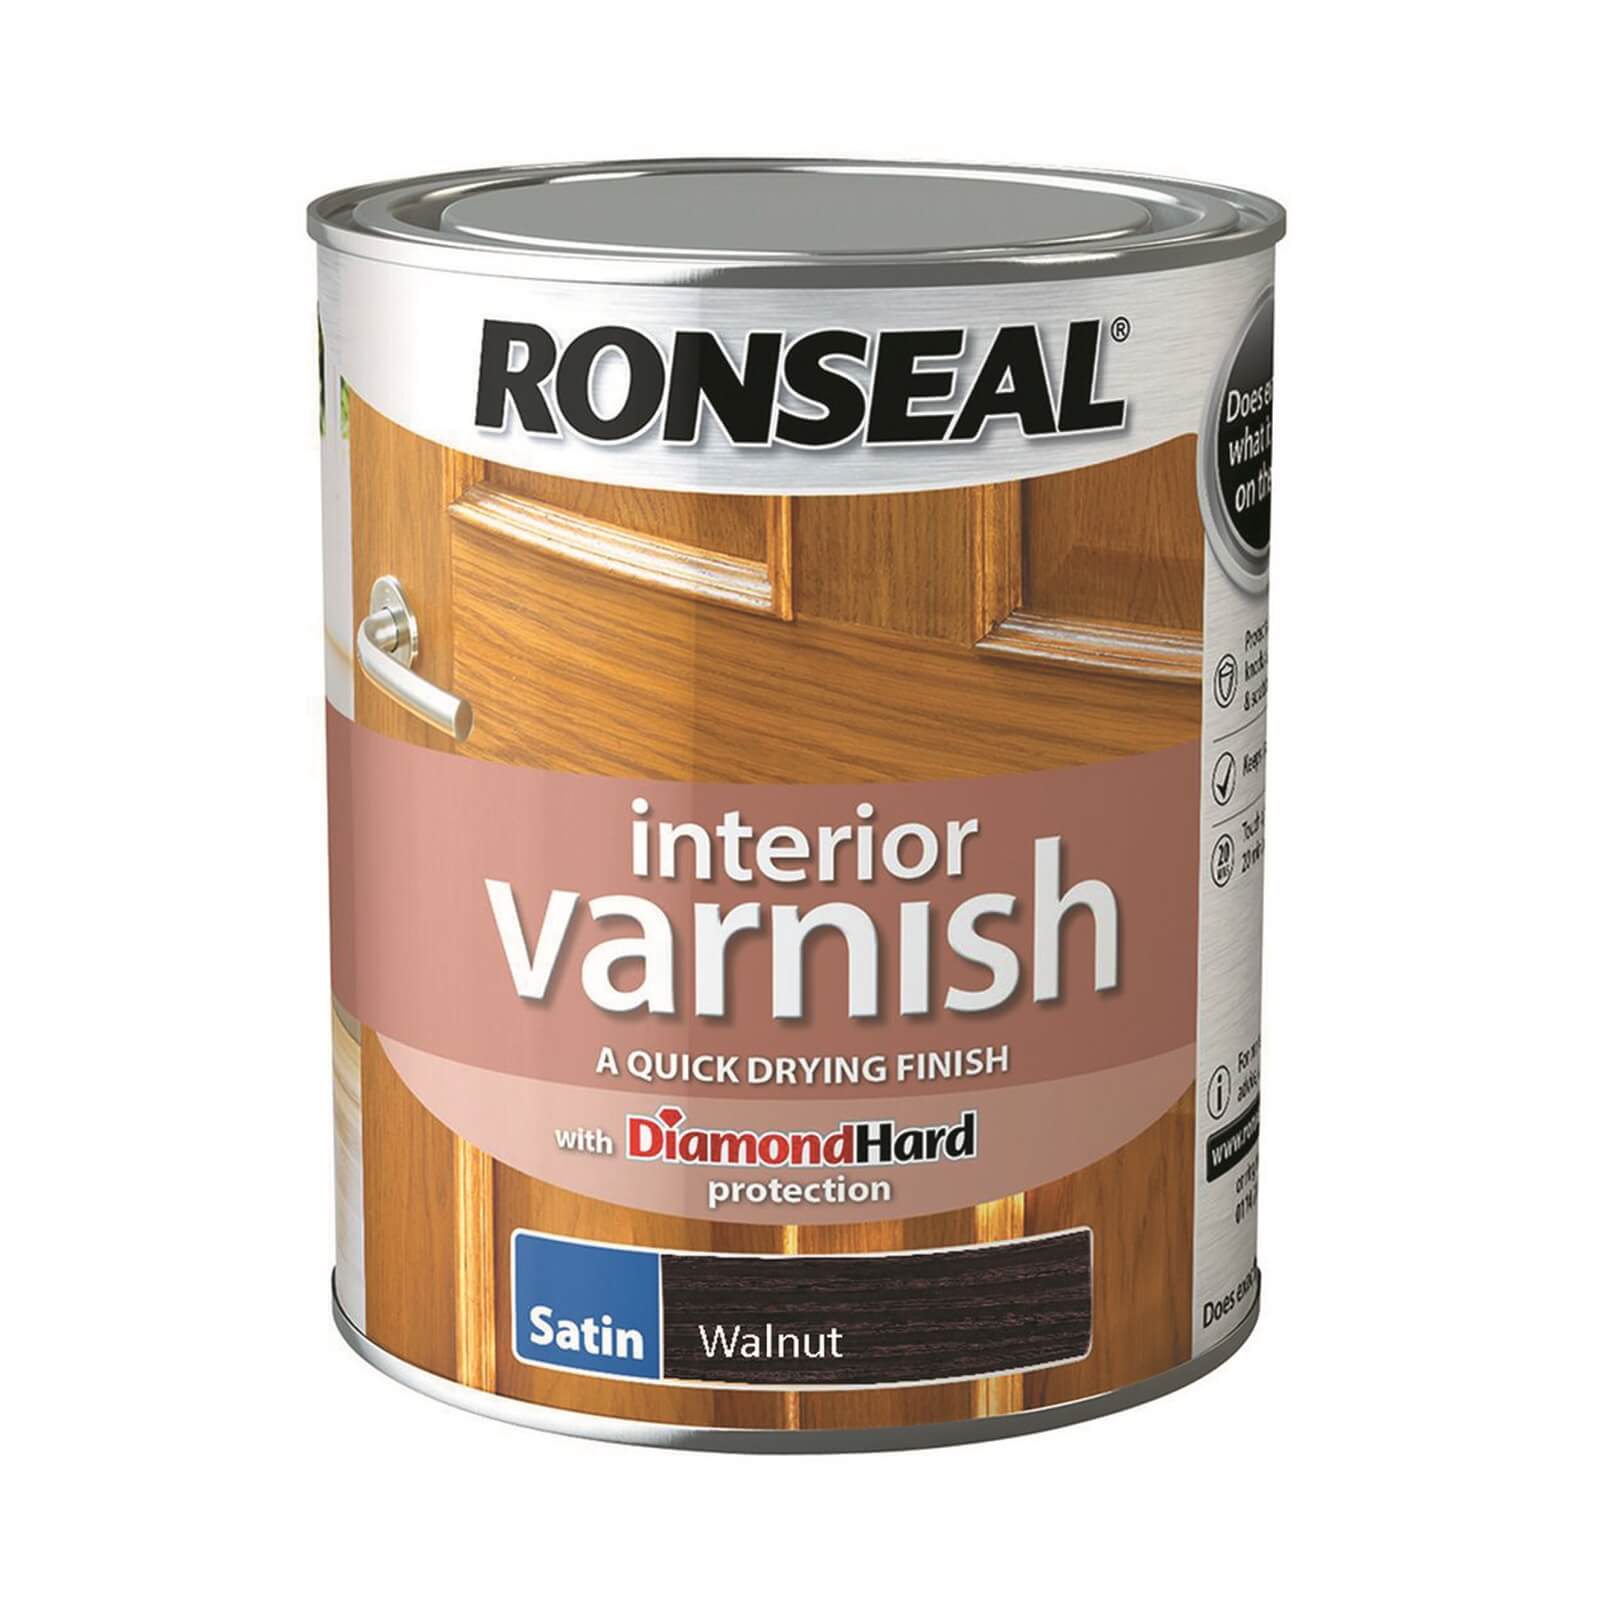 Ronseal Interior Varnish Satin Walnut - 750ml